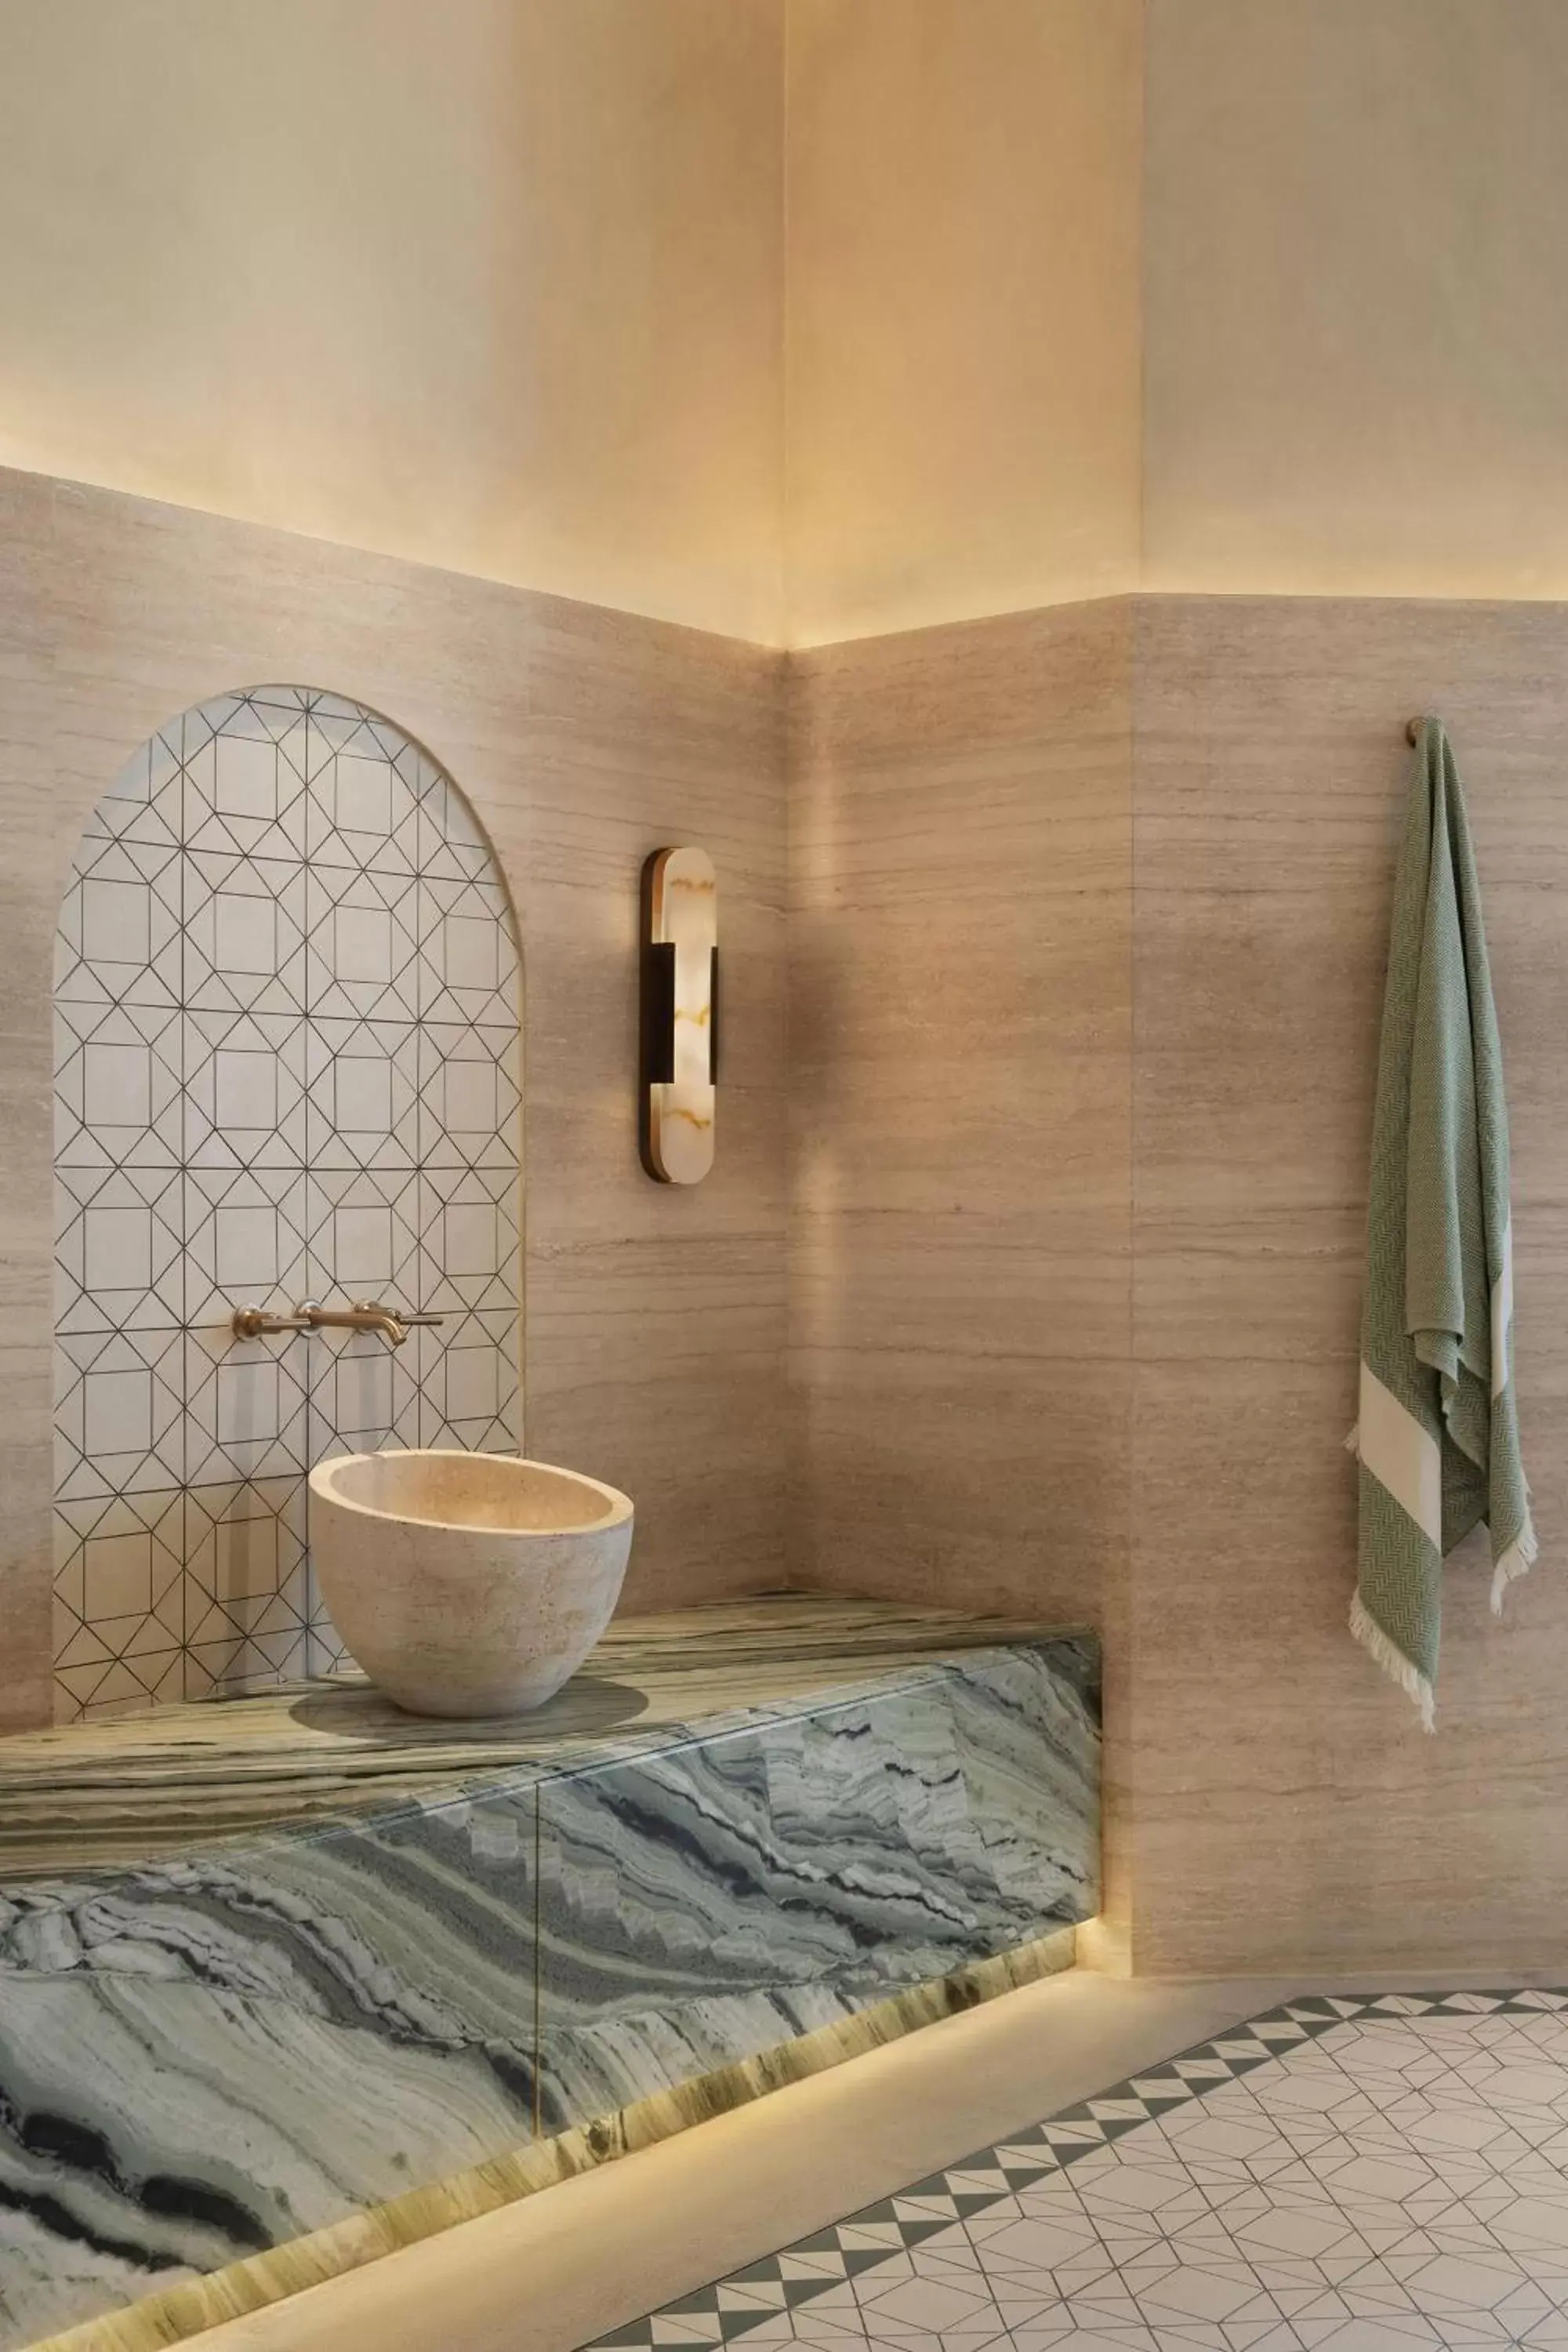 Spa and wellness centre/facilities, Bathroom in Bab Al Shams, A Rare Finds Desert Resort, Dubai